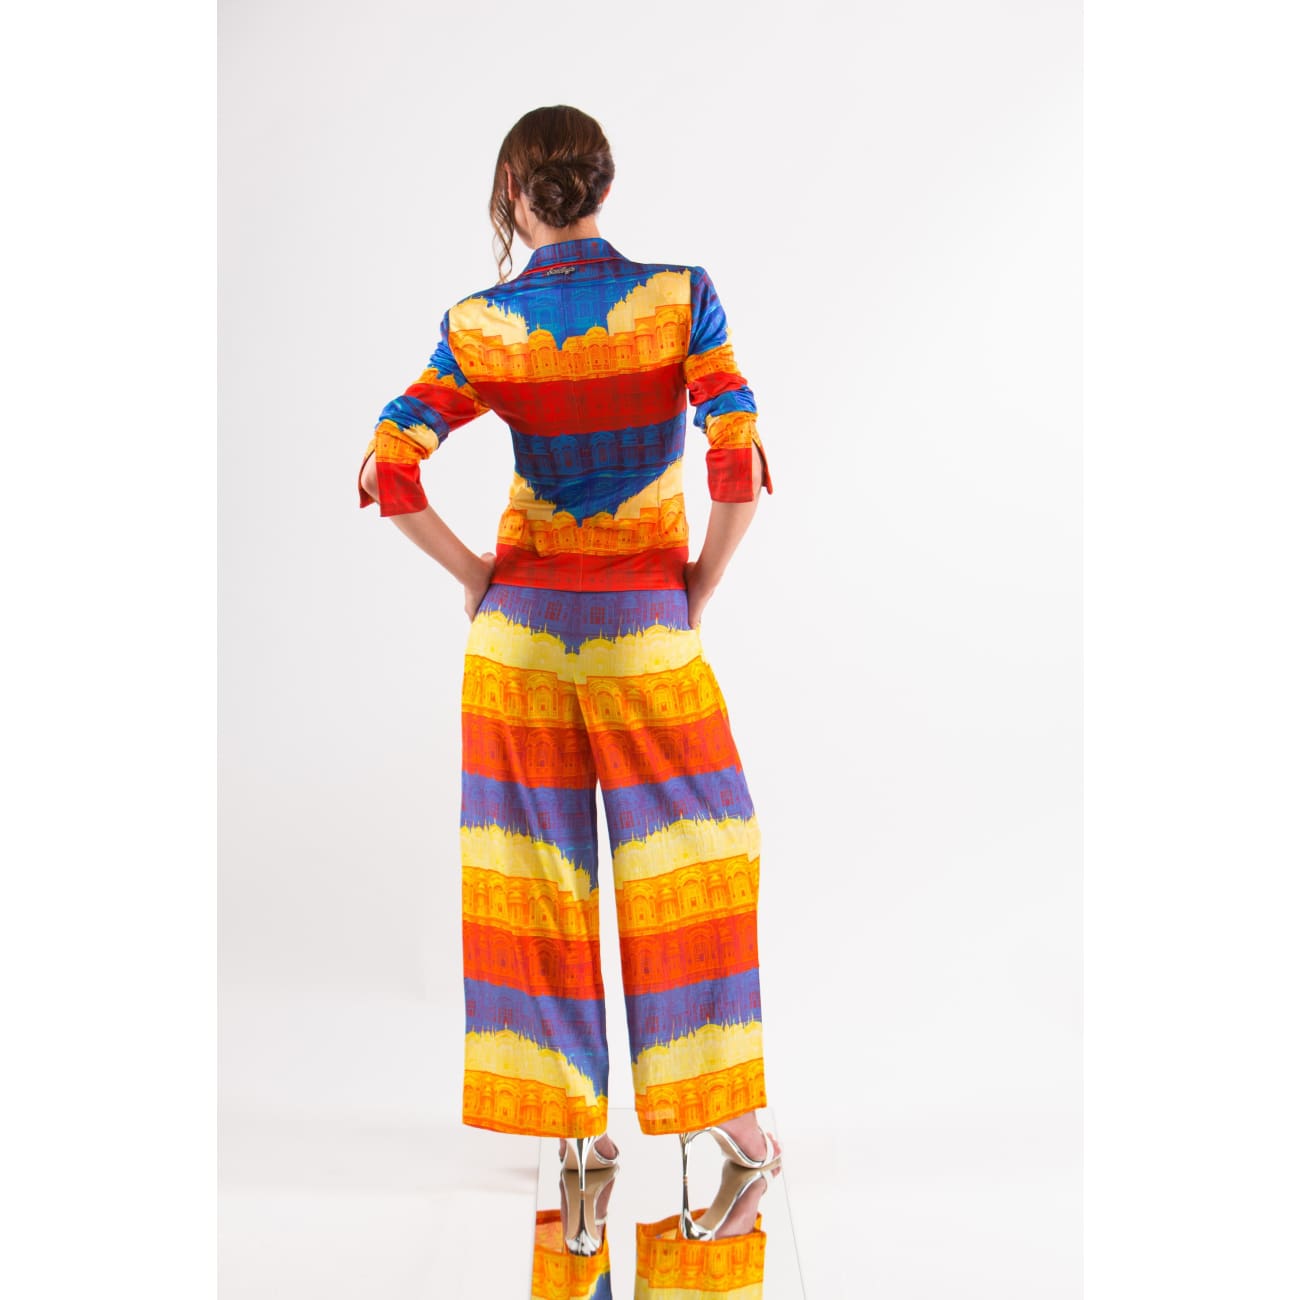 Anna Trousers Skirt and Trousers Sandhya Garg Free Shipping Custom Made United States Designer dress Luxury Luxury dress